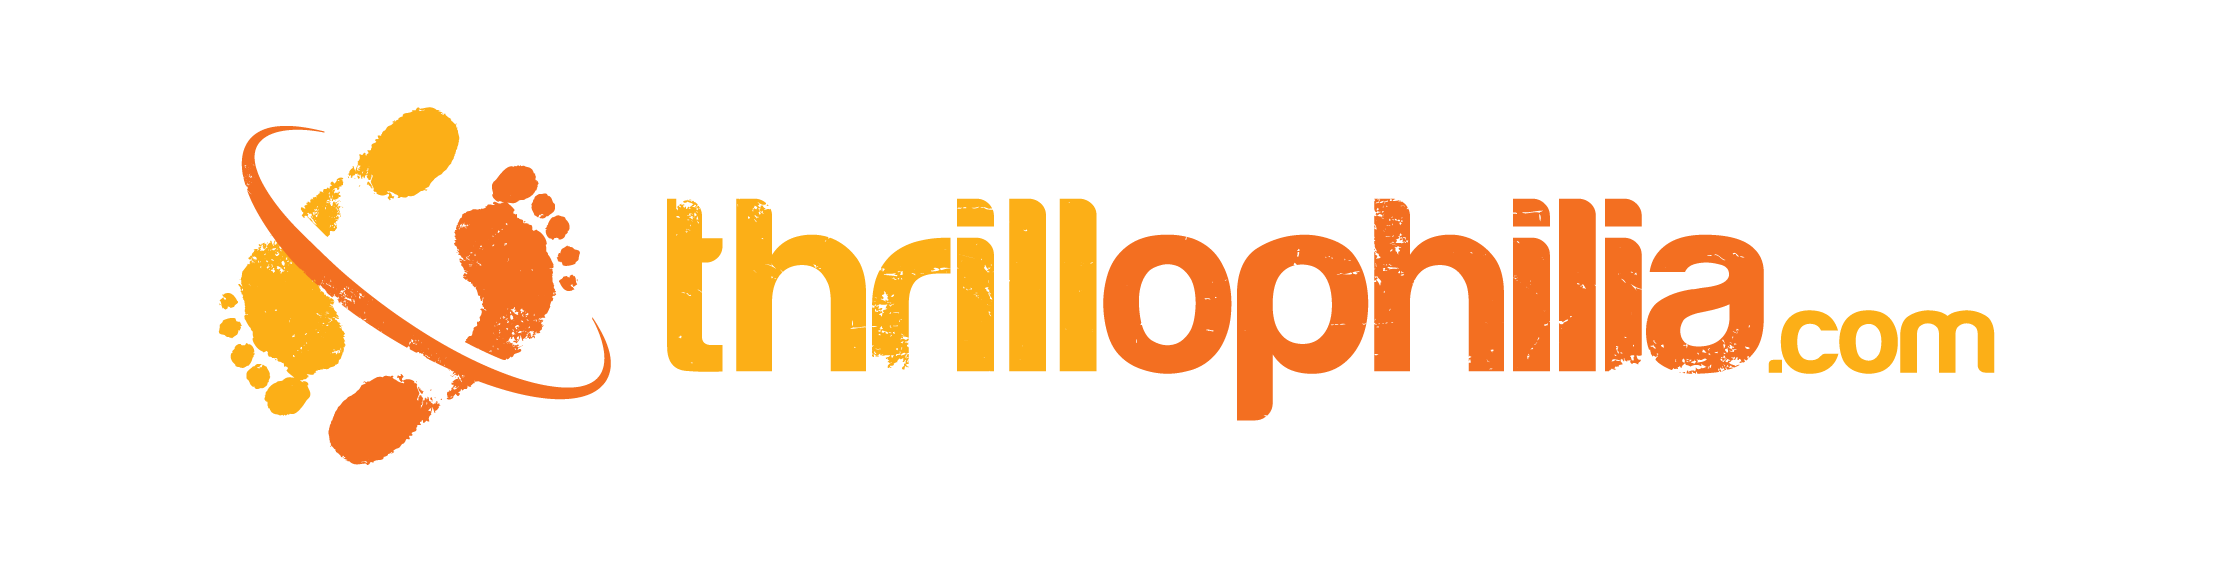 Thrillophilia Coupons